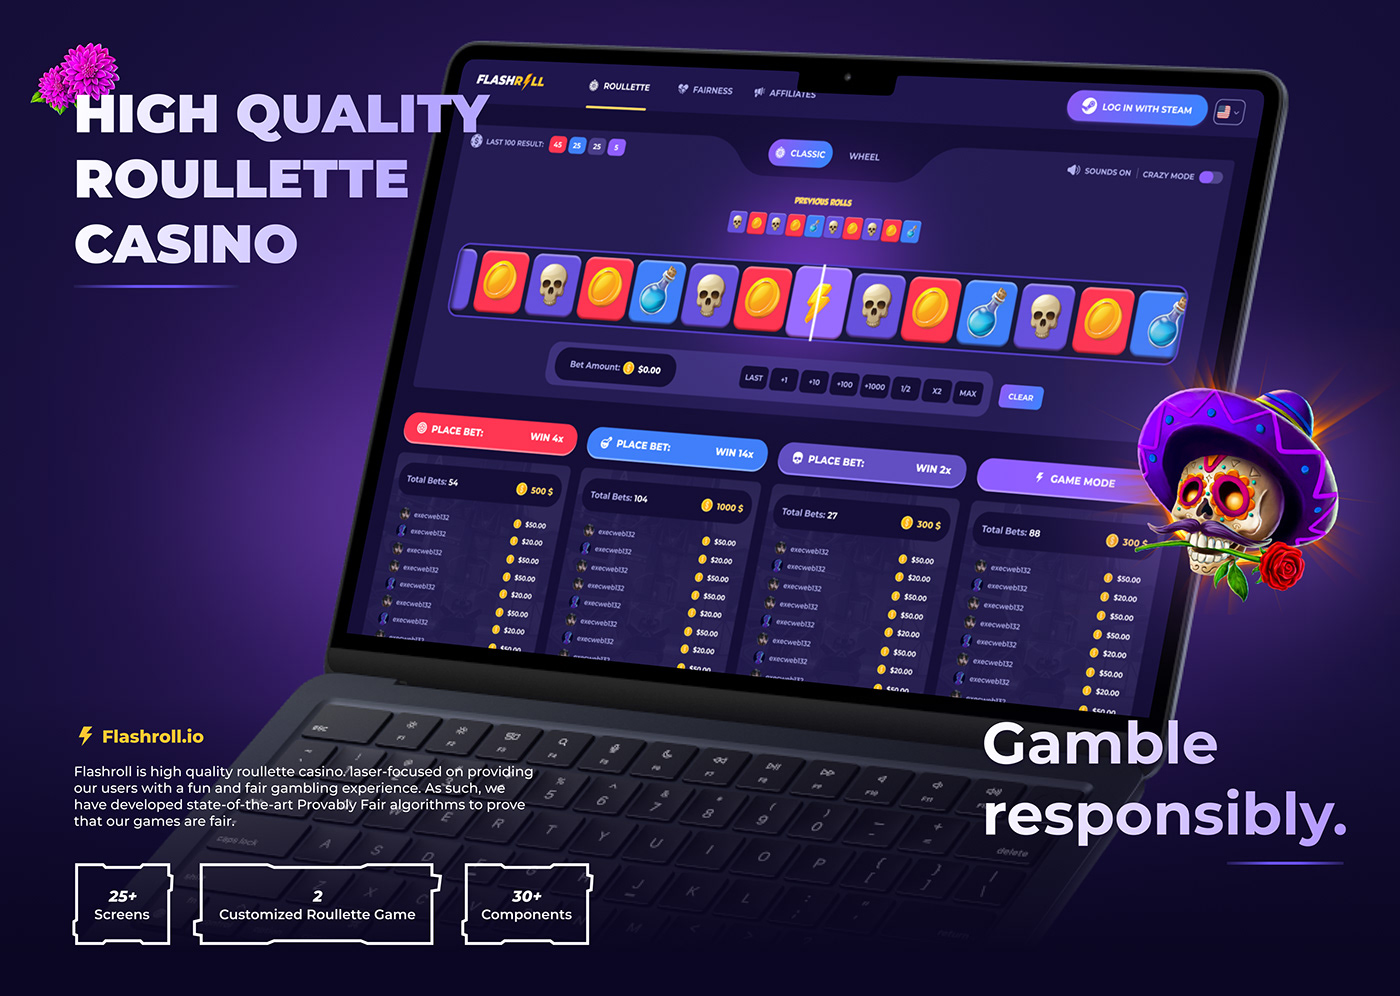 Baccarat betting blackjack casino gambling live casino online casino Poker roullete Slots